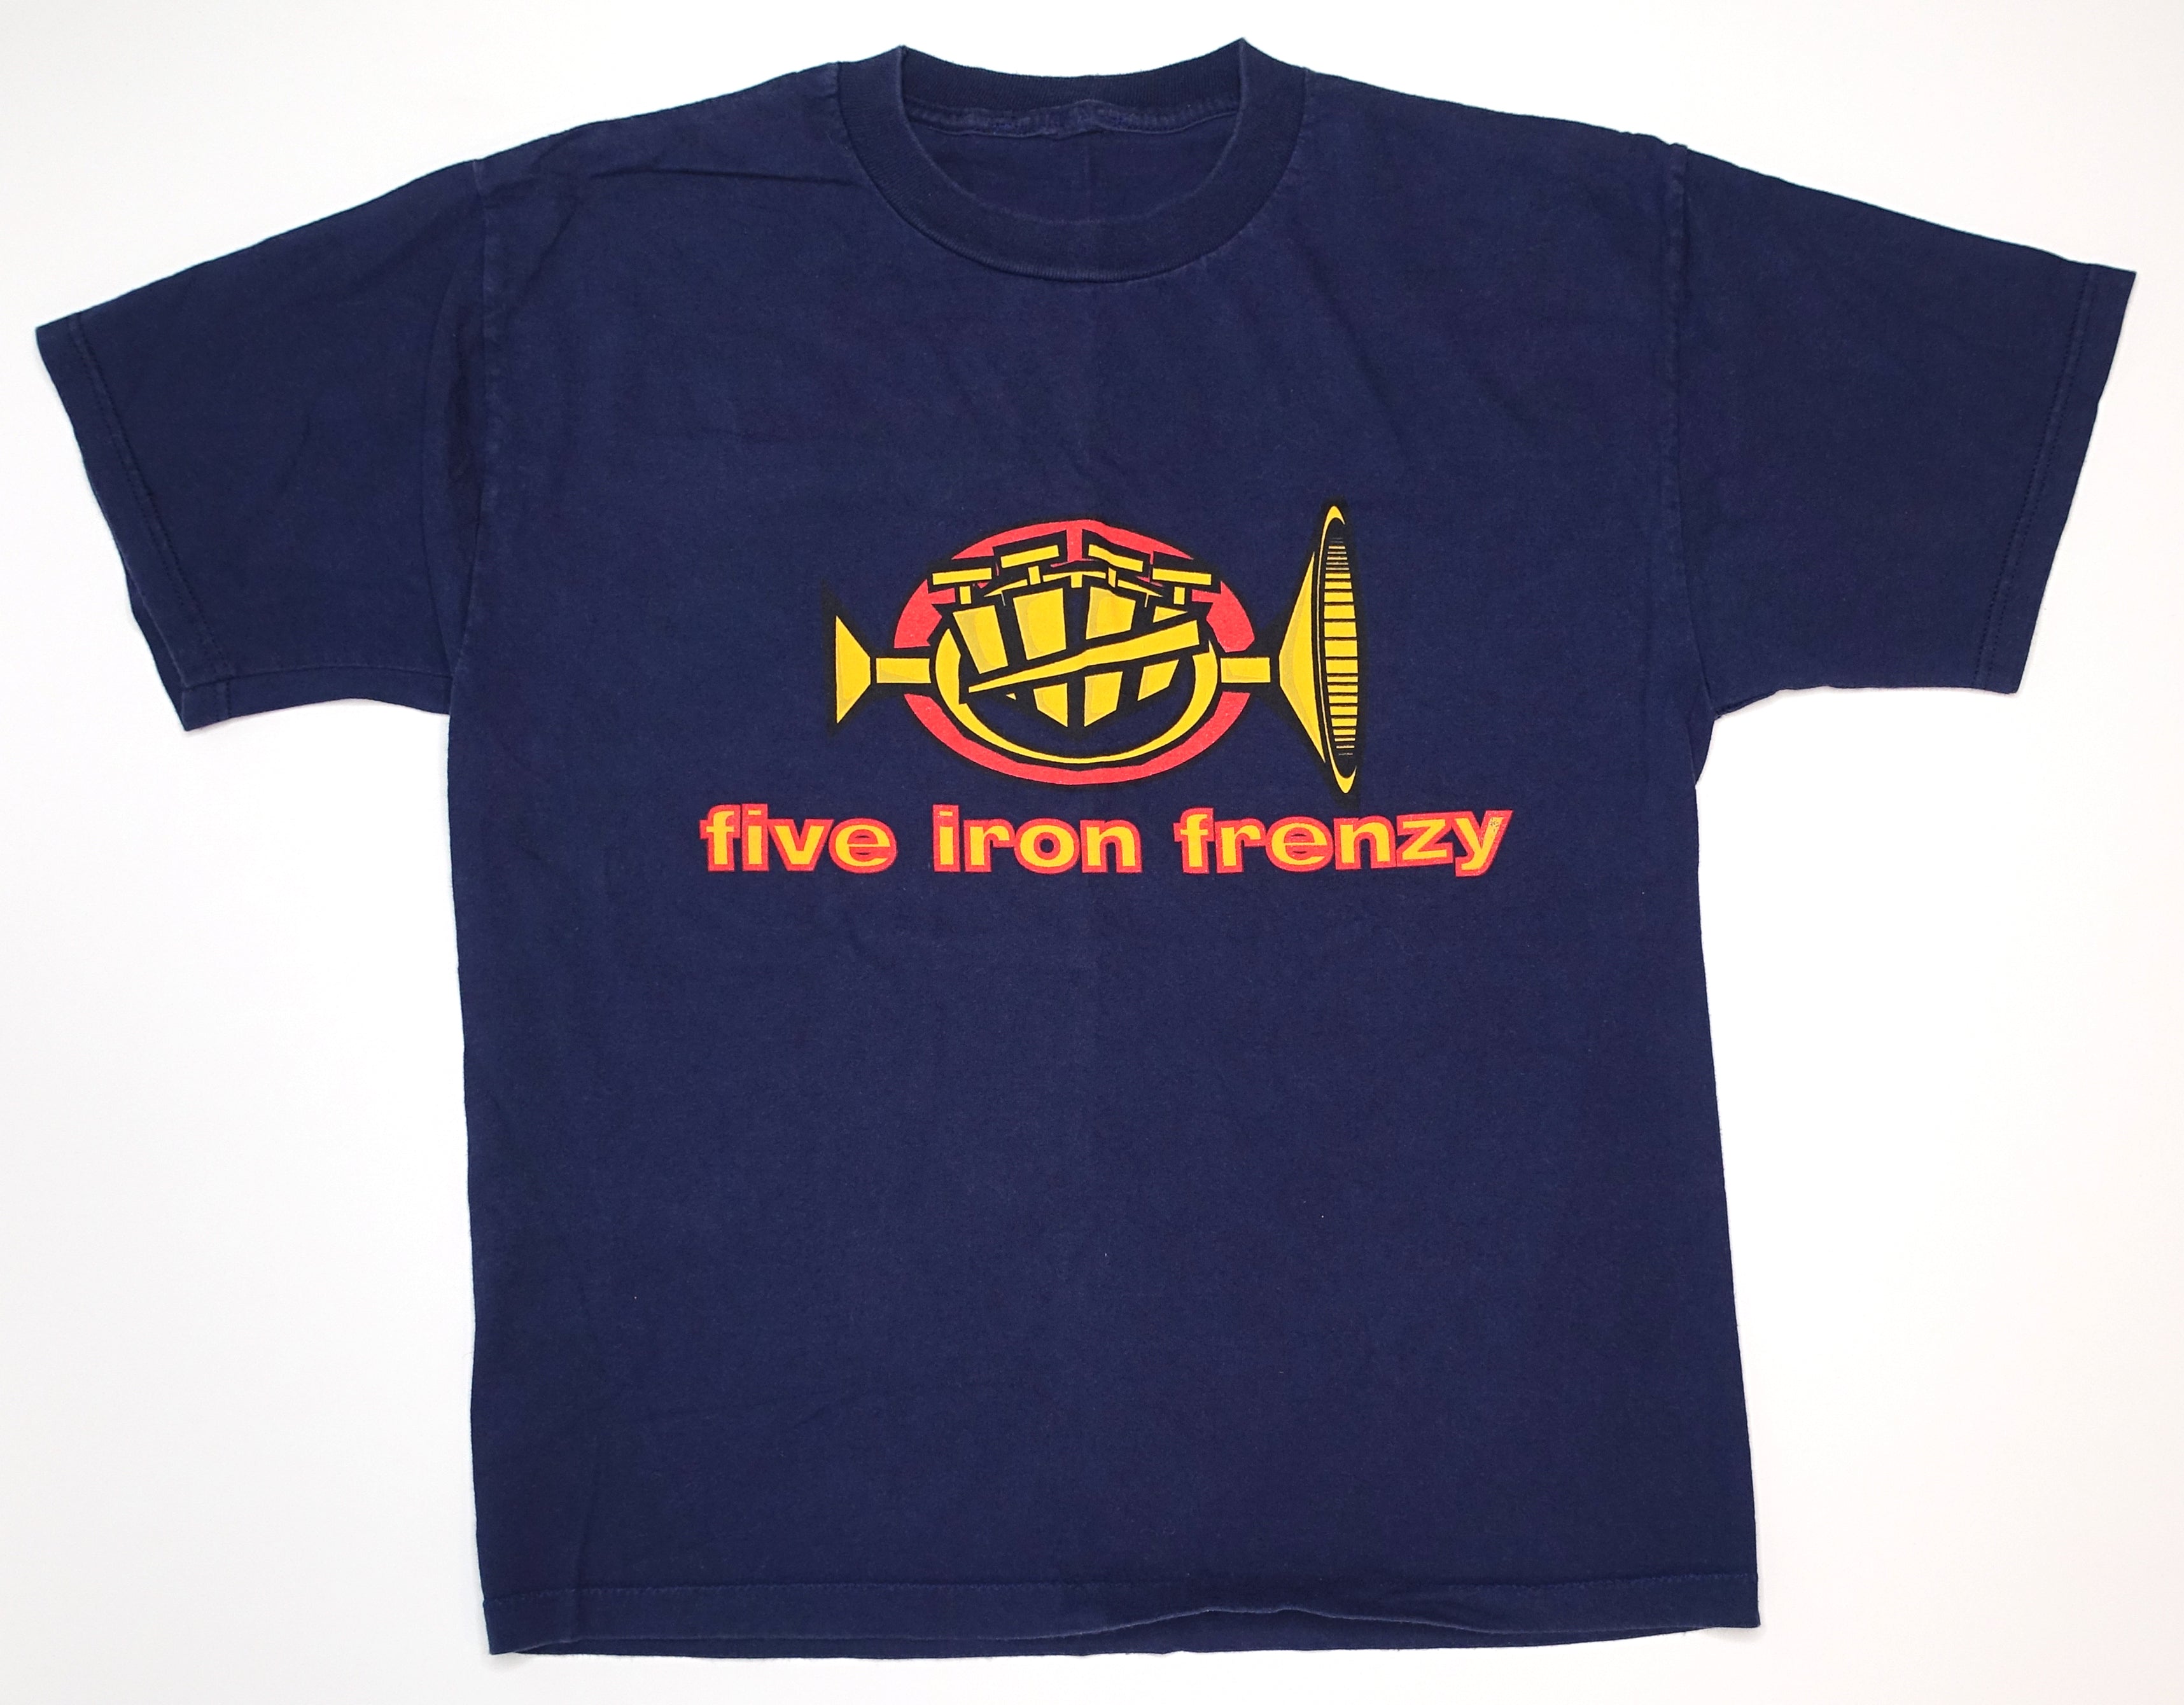 Five Iron Frenzy – Trumpet Tour Shirt Size Medium